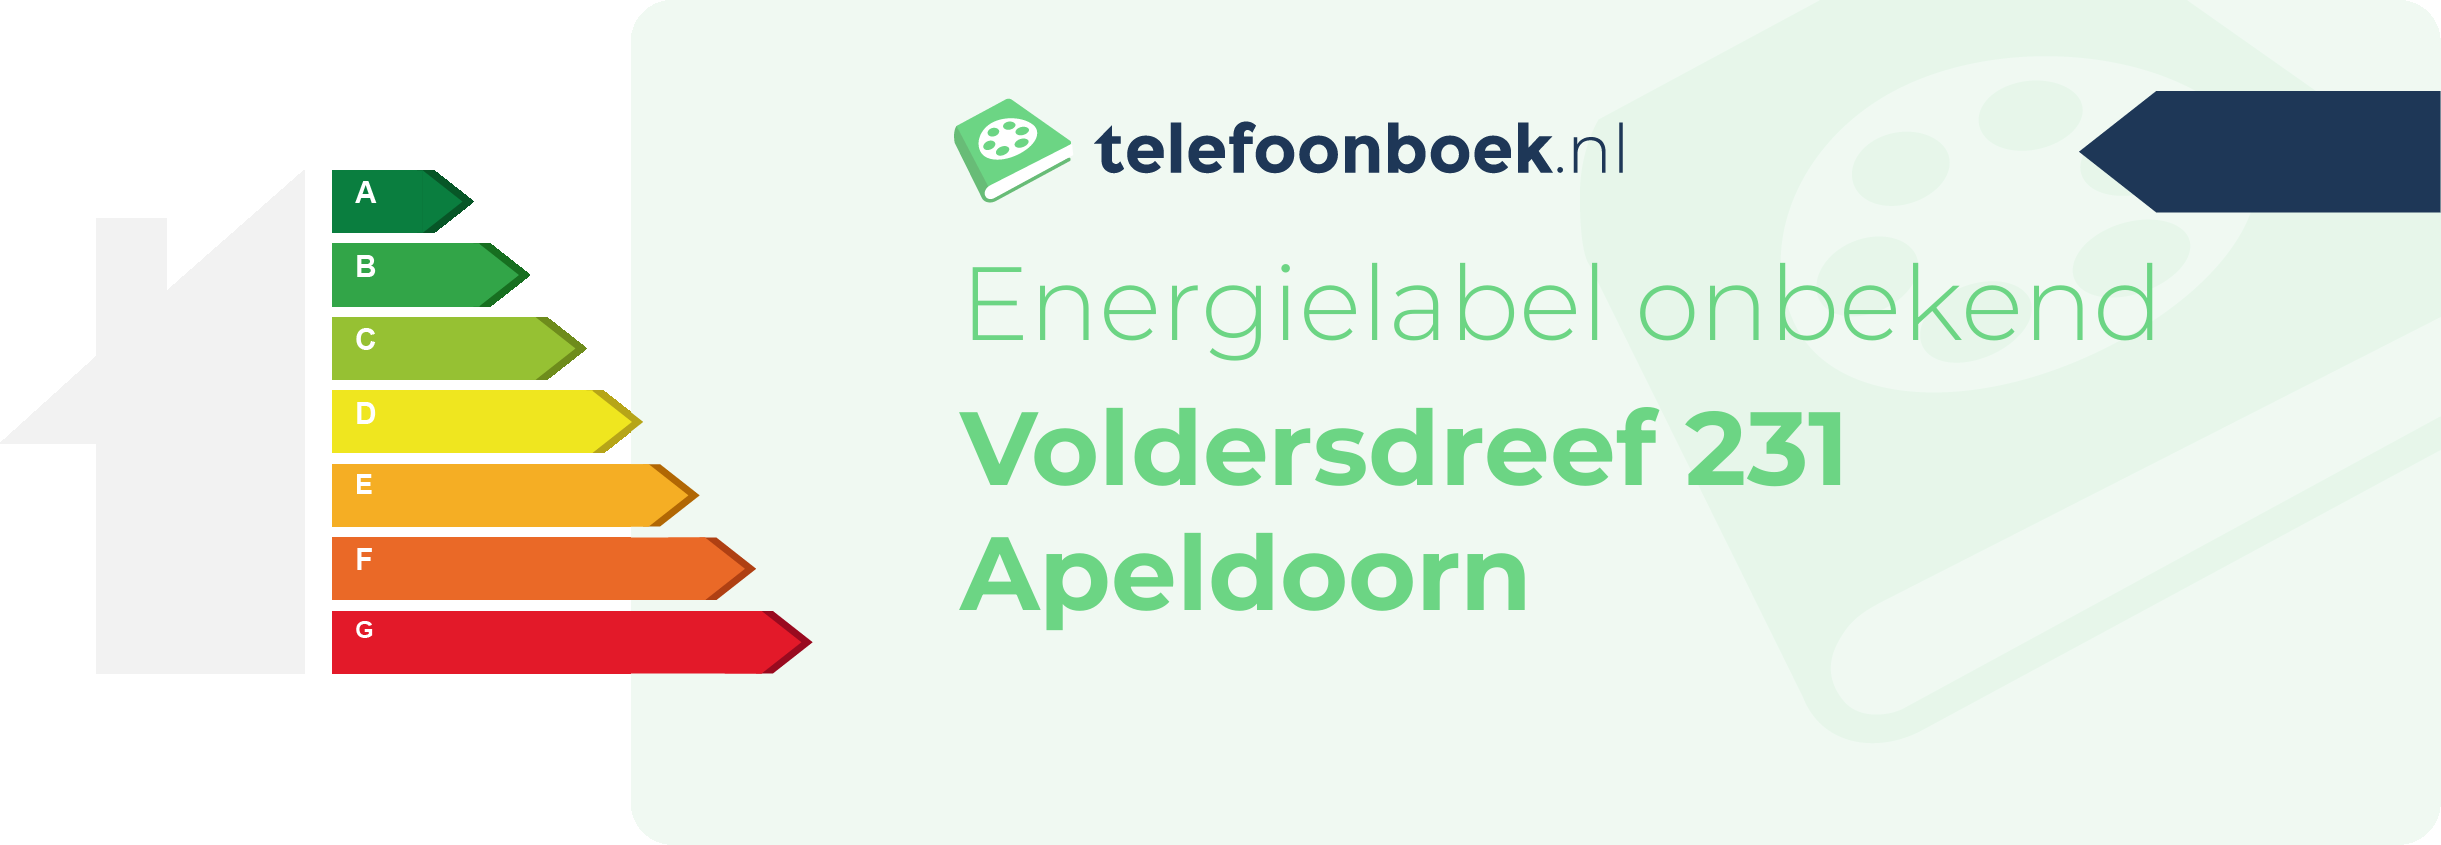 Energielabel Voldersdreef 231 Apeldoorn